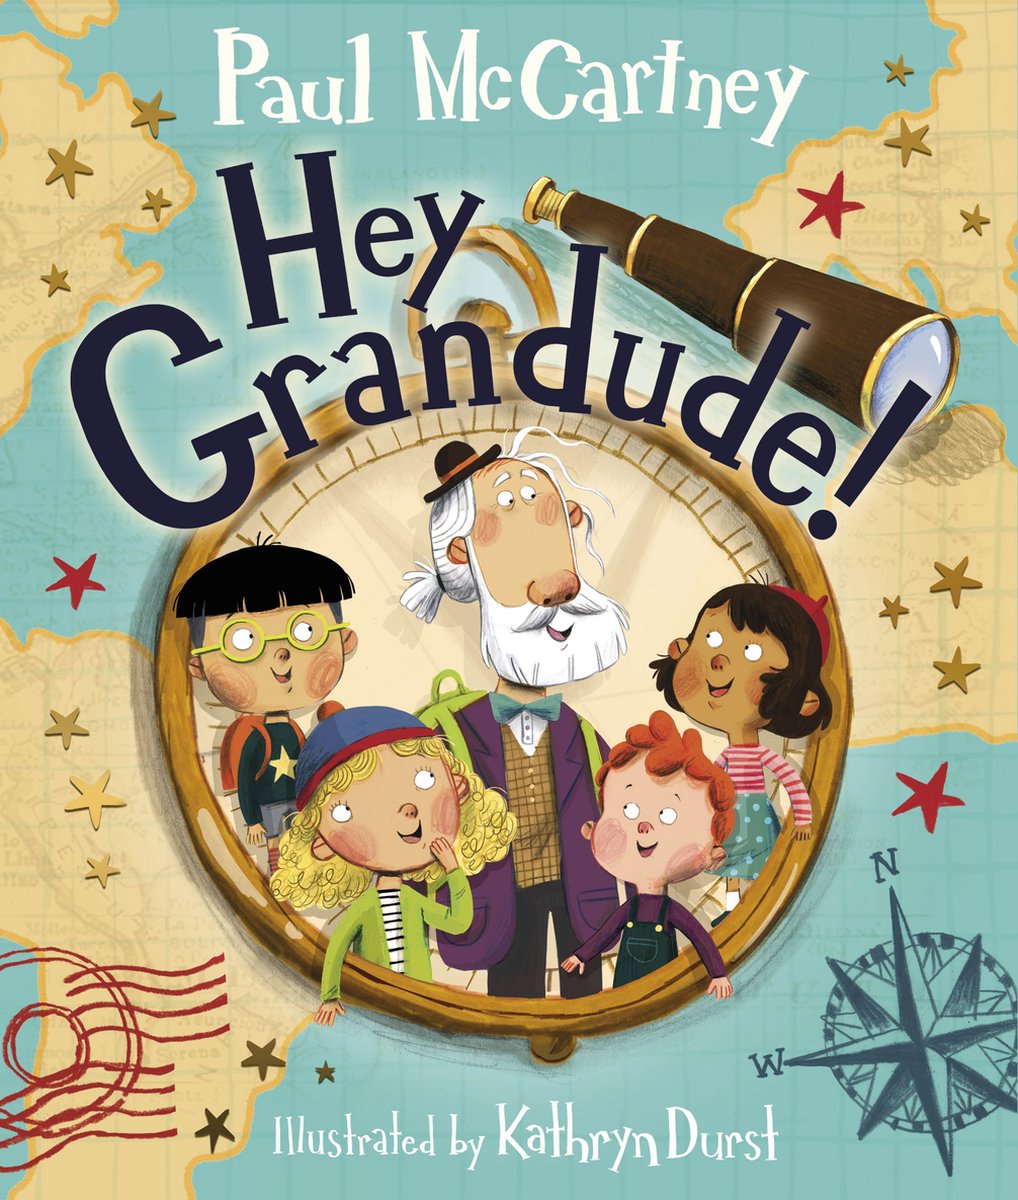 Hey Grandude! - Penguin Random House Children's UK